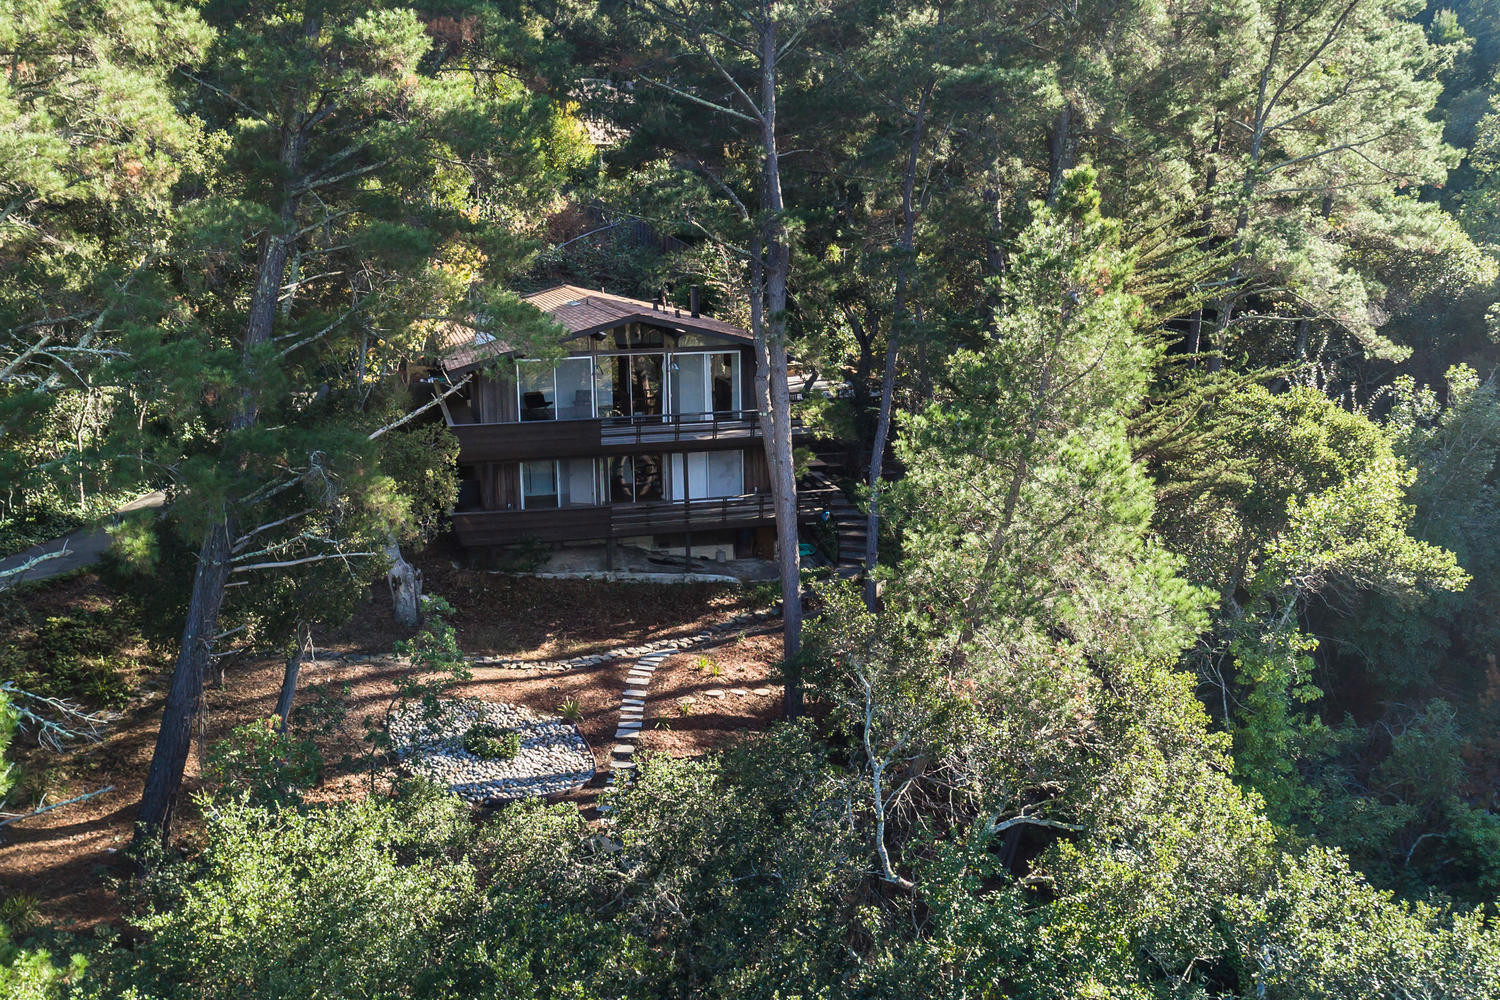 141 Glen Aulin Home nestled among the trees in Burlingame Hills Neighborhood in Burlingame.